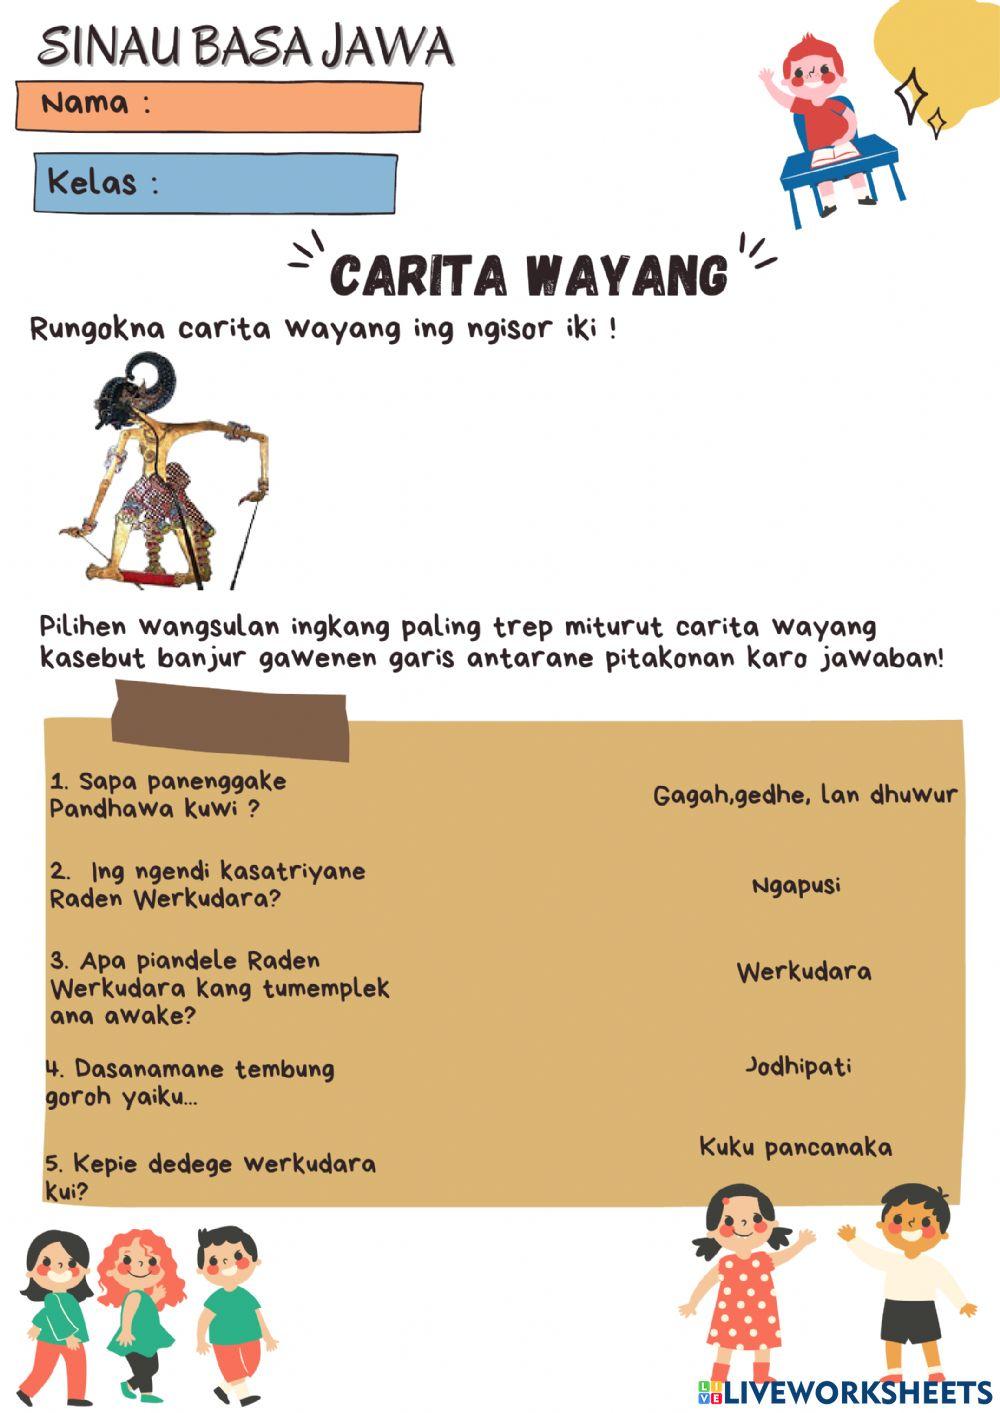 Soal Bahasa Jawa (Add Mp3 files) - Carita Wayang-